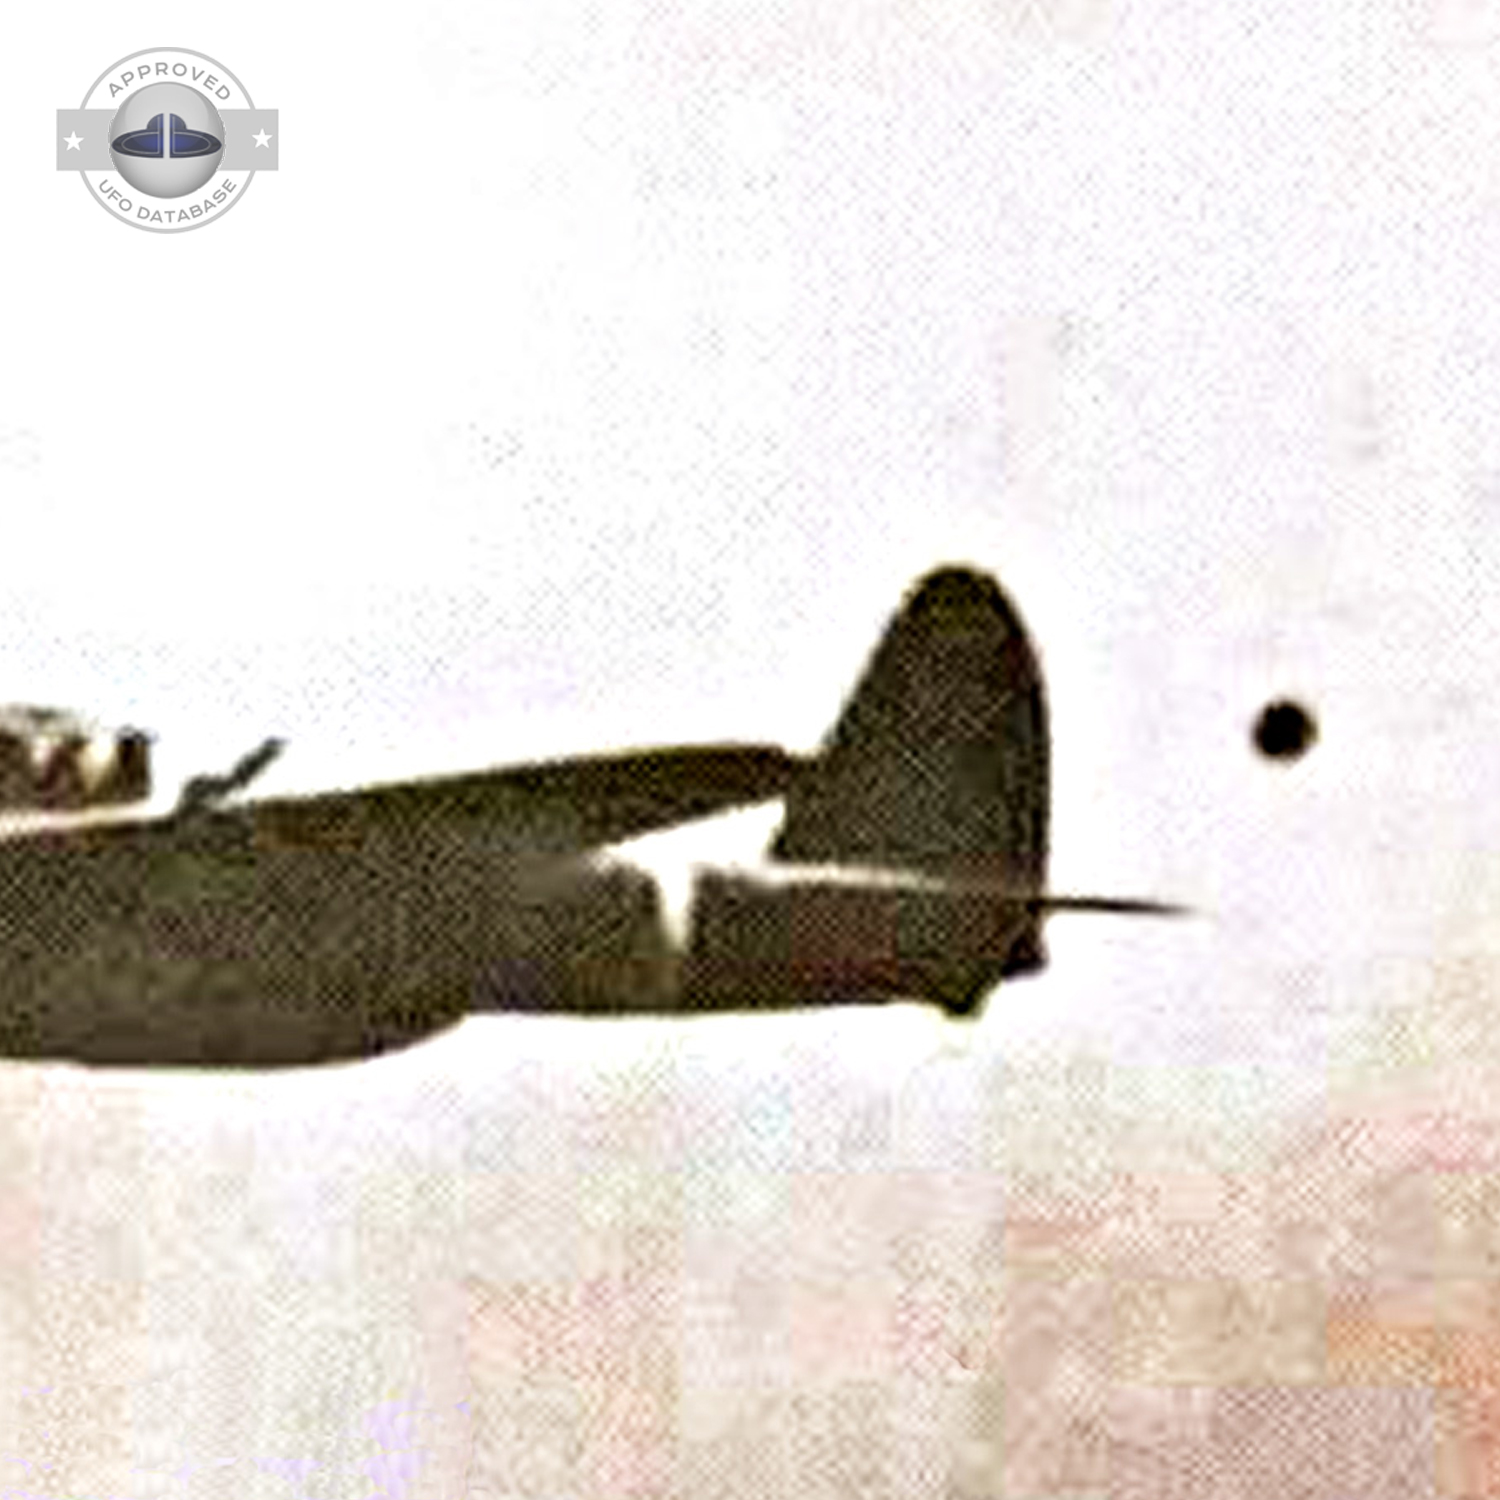 World War II Japanese Sally Bomber followed by UFO (Foo Fighters) UFO Picture #209-2